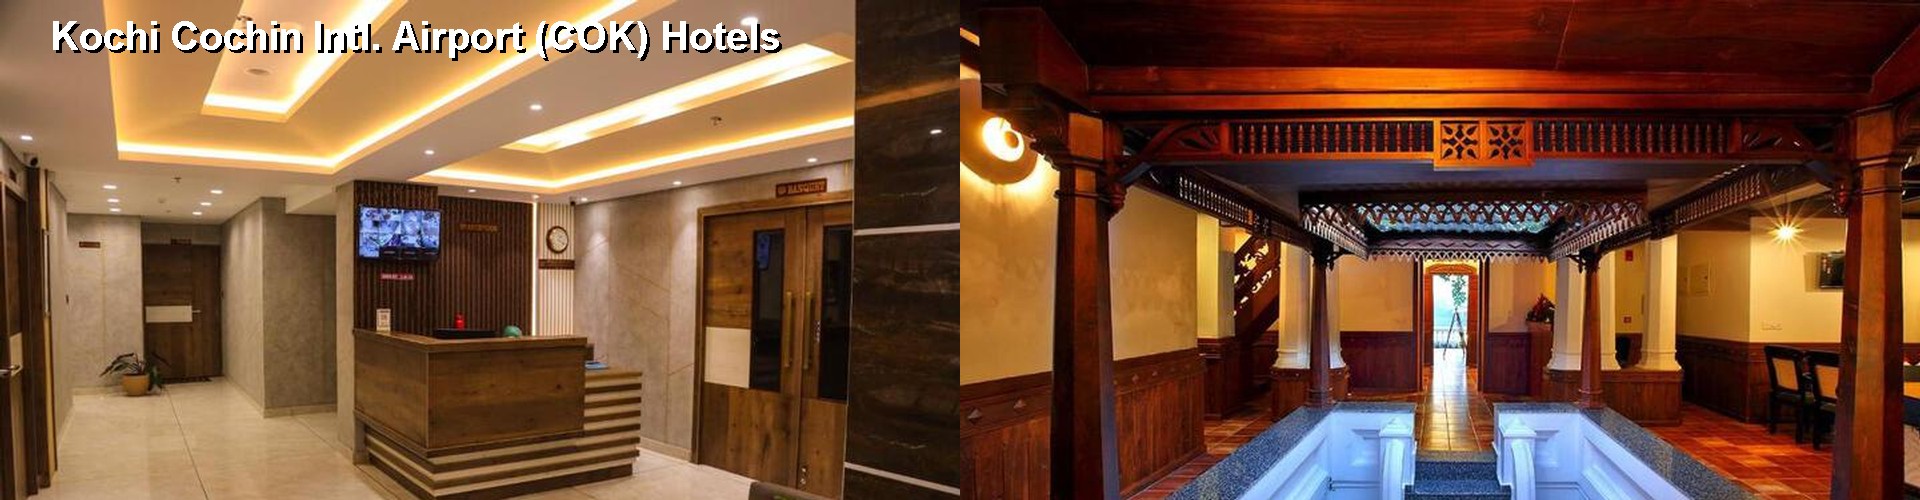 5 Best Hotels near Kochi Cochin Intl. Airport (COK)